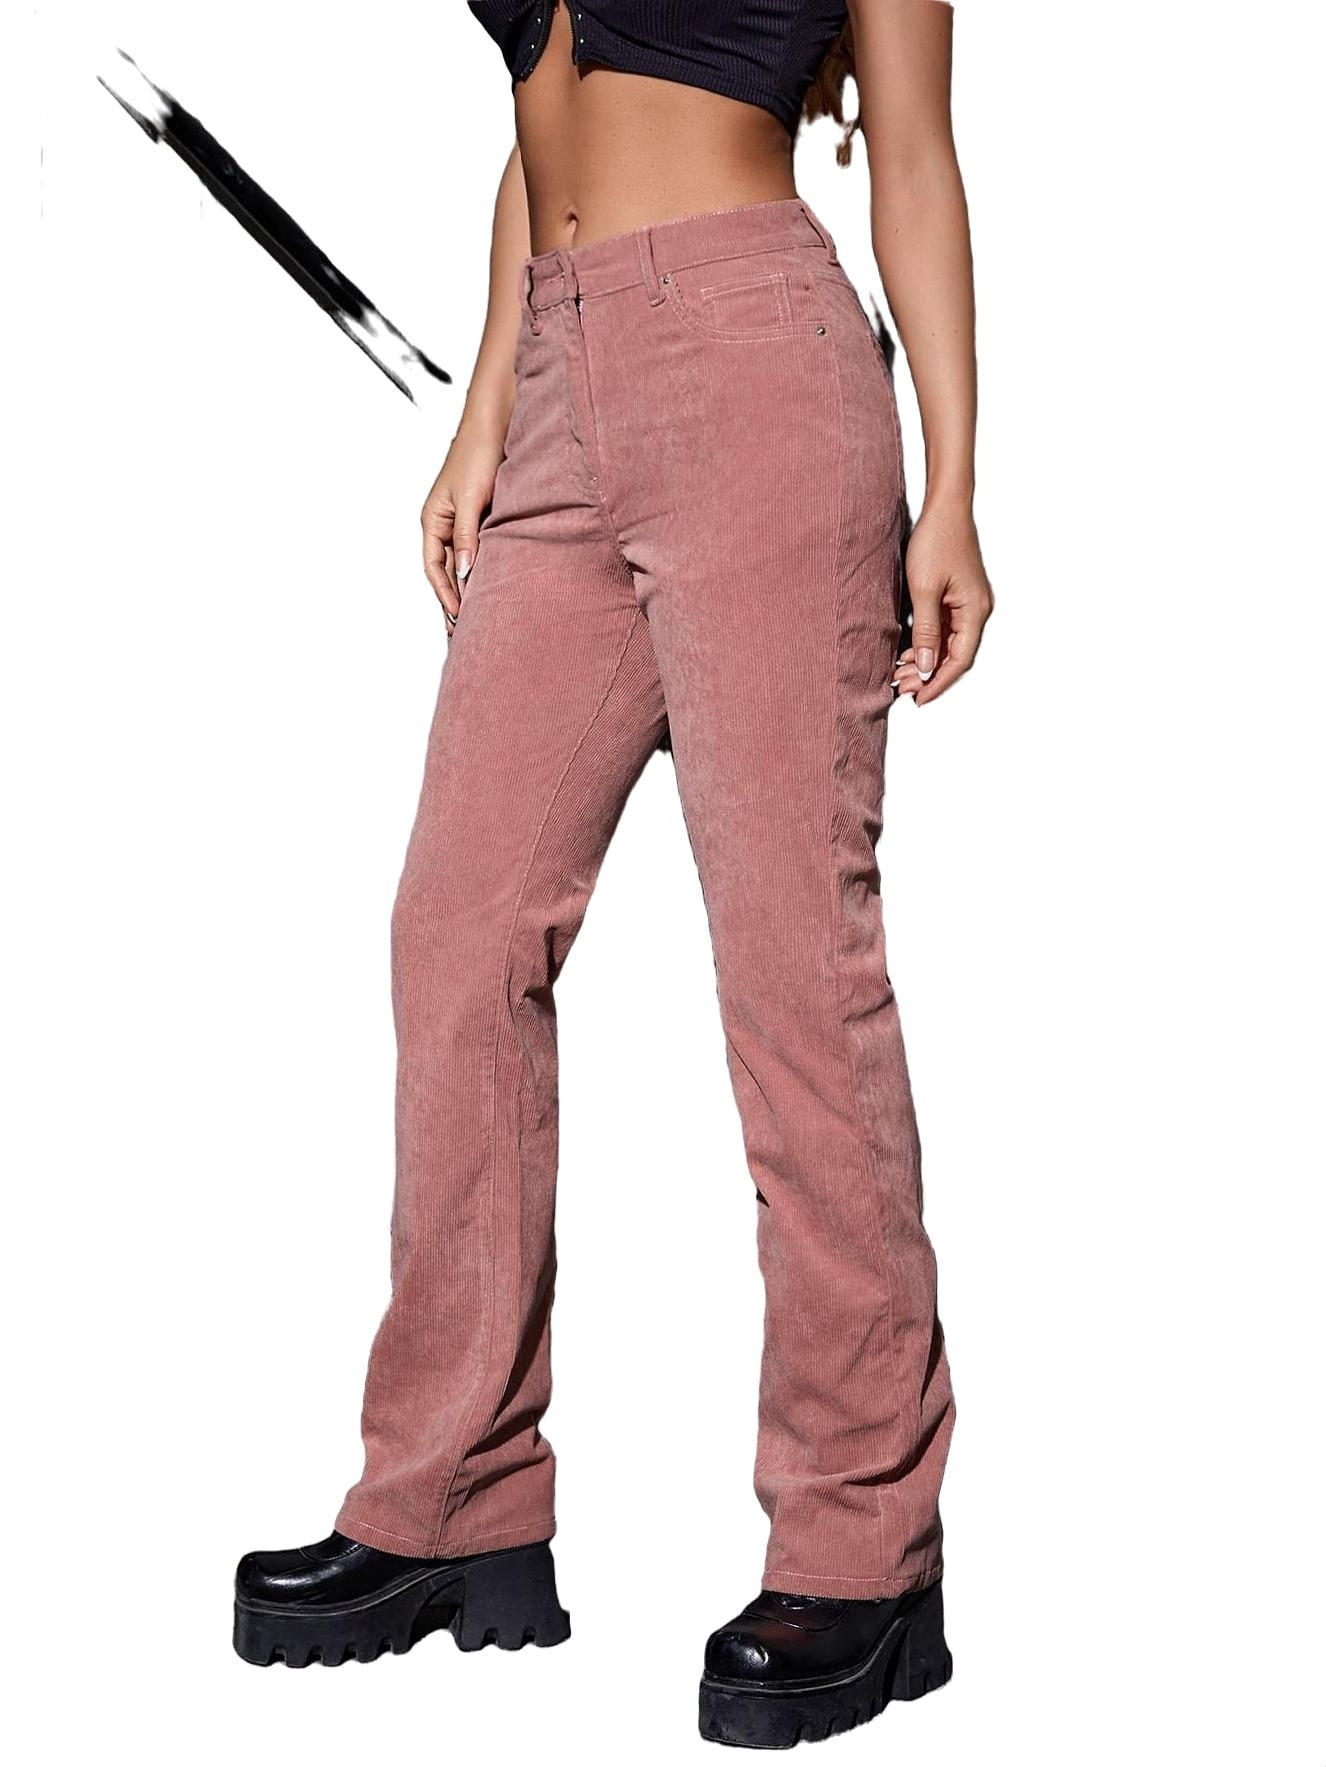 Women's Pants Solid High Waist Flare Leg Corduroy Pants Dusty Pink L